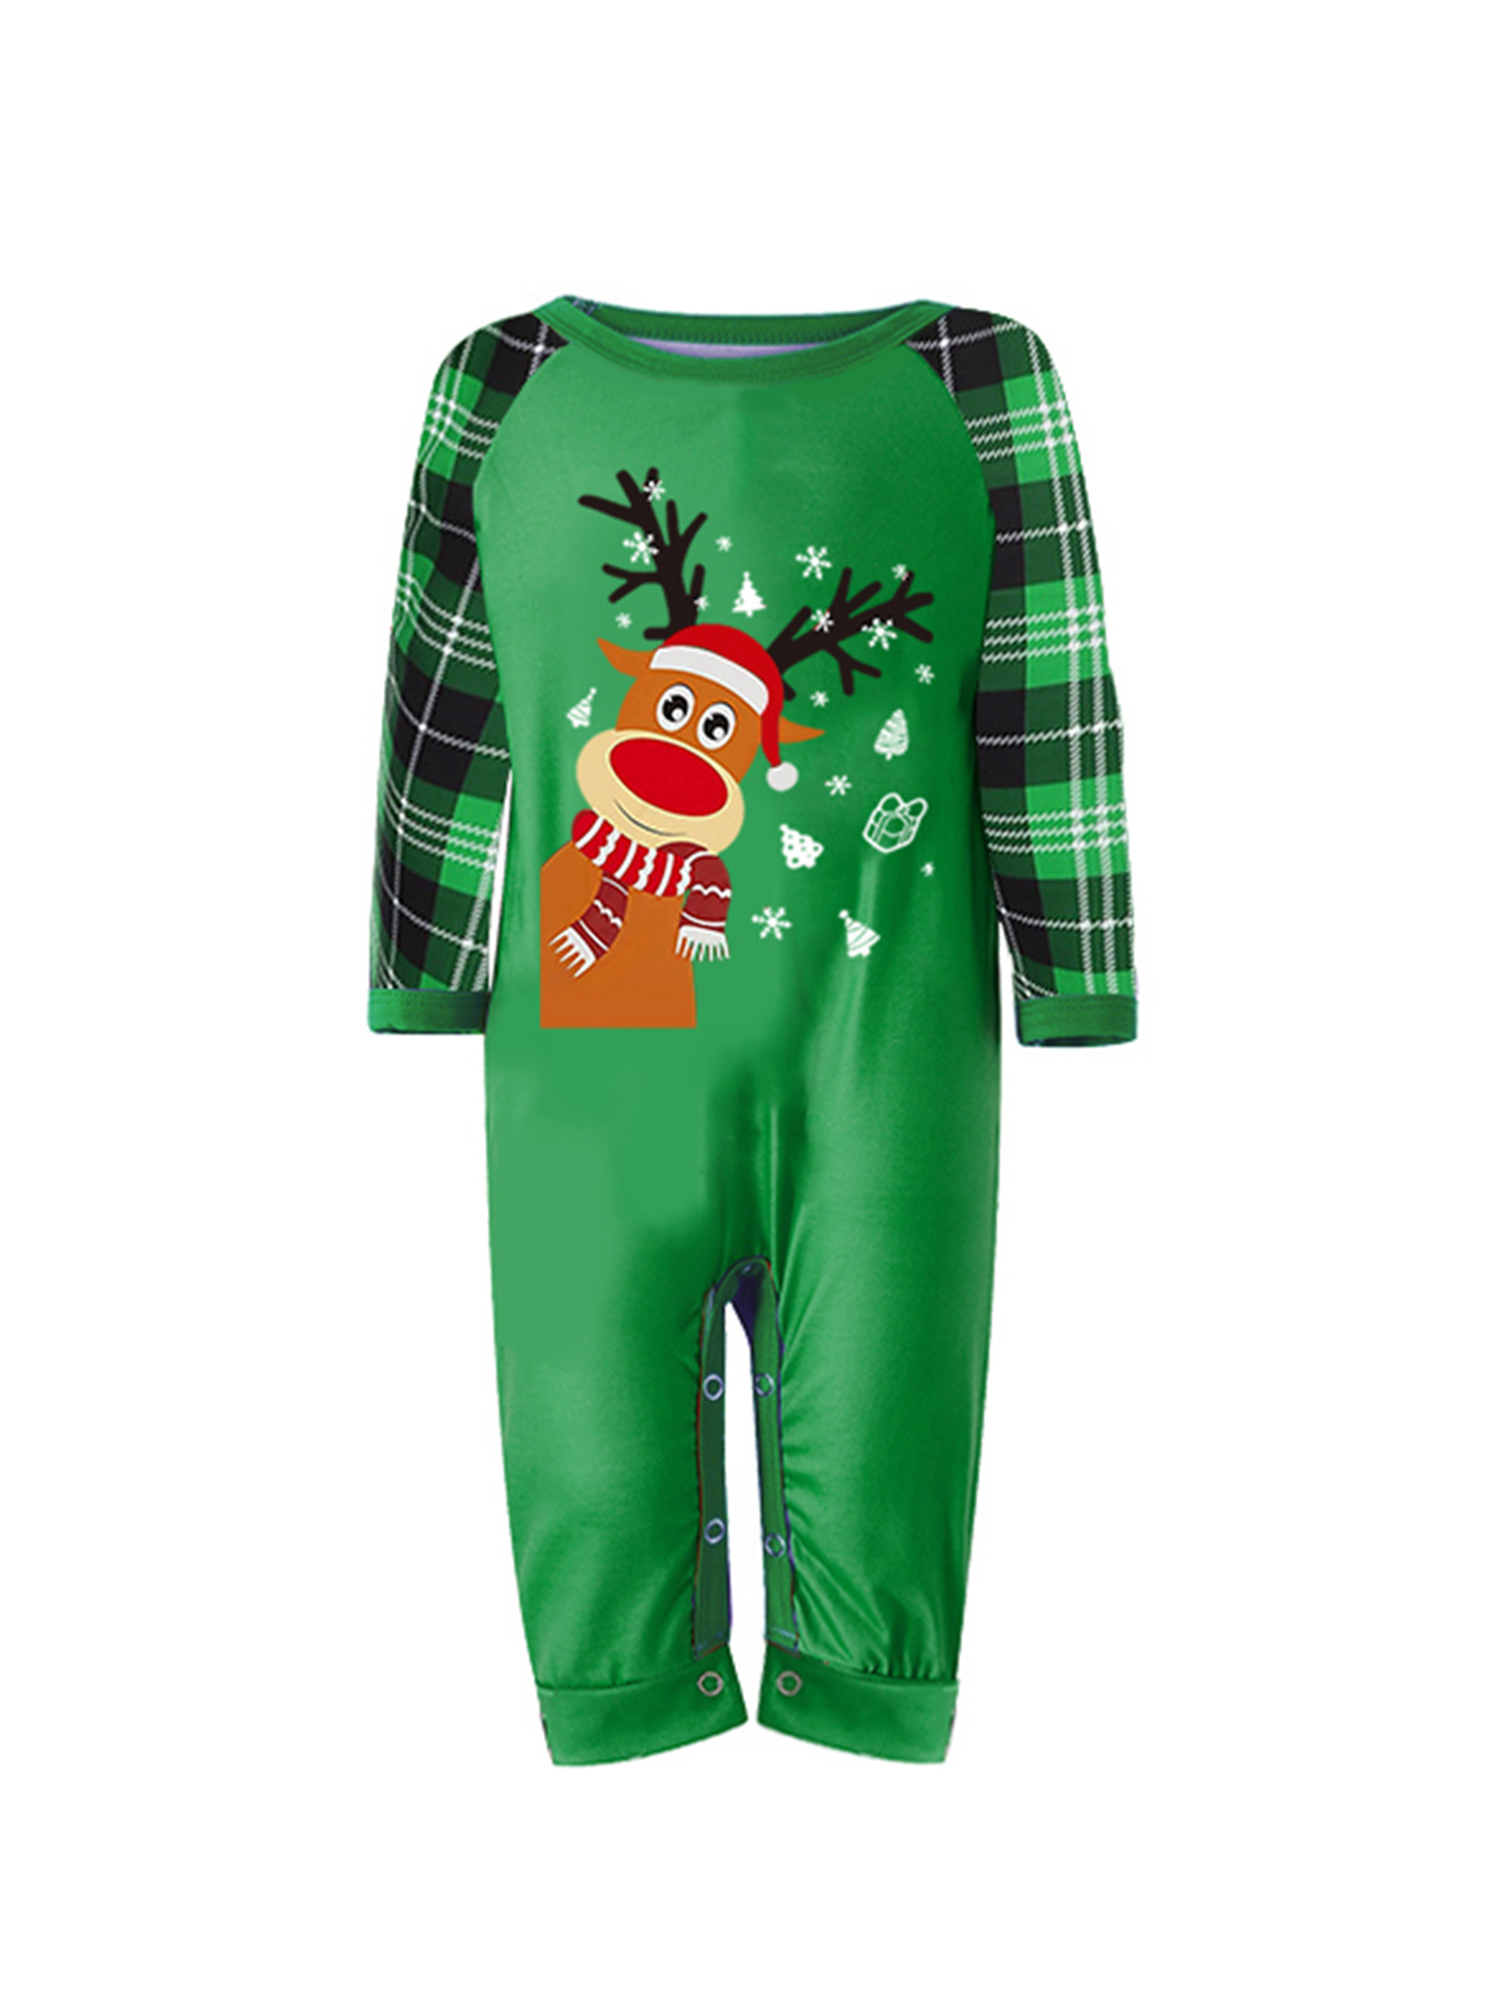 Christmas Family Pajamas Matching Sets Xmas Matching Pjs, Long Sleeve Deer Tops + Plaid Pants Set for Adults, Kid, Baby, Dog - image 2 of 6